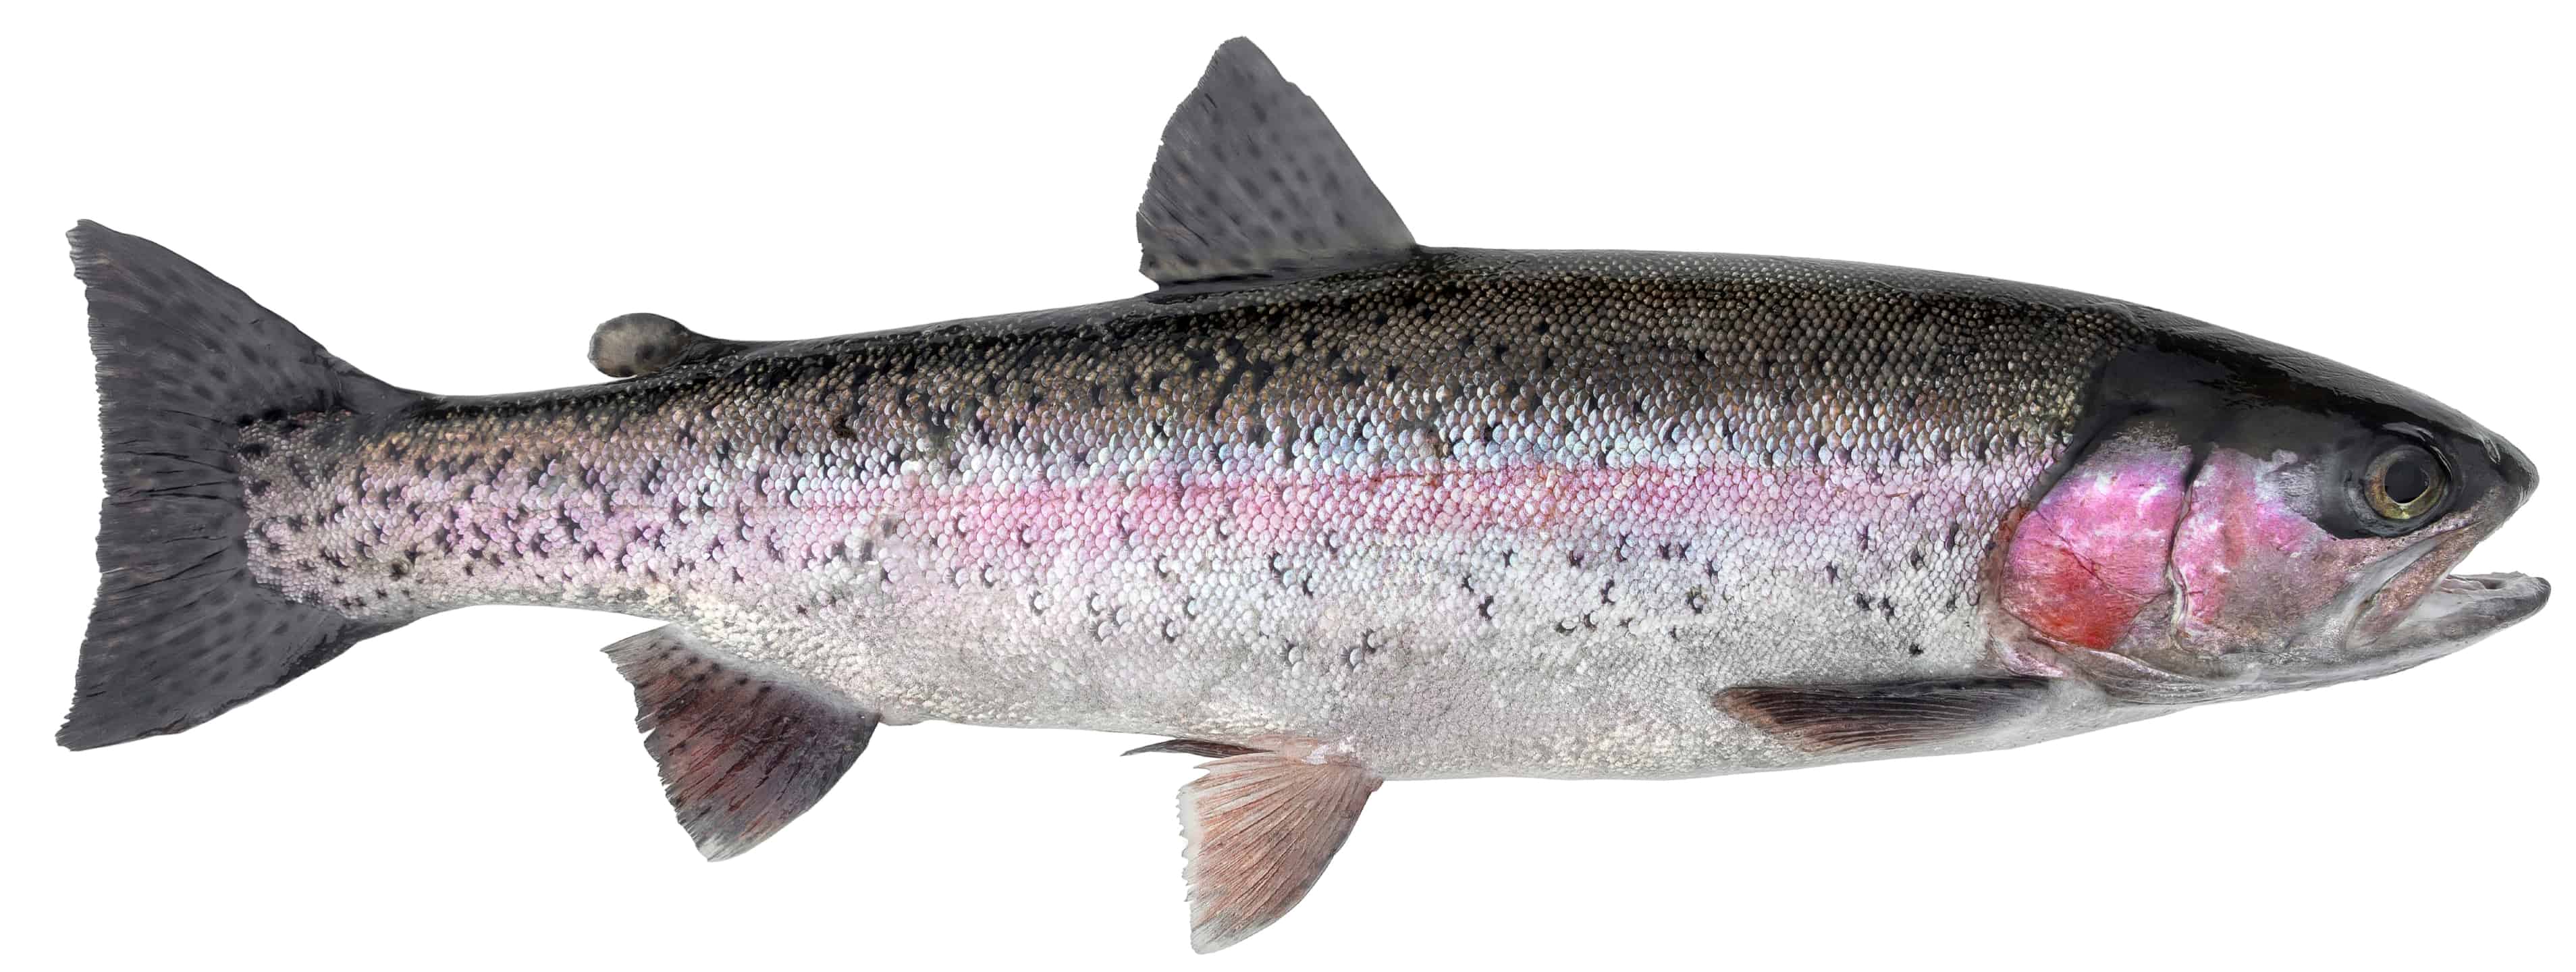 Steelhead Salmon Pictures - AZ Animals